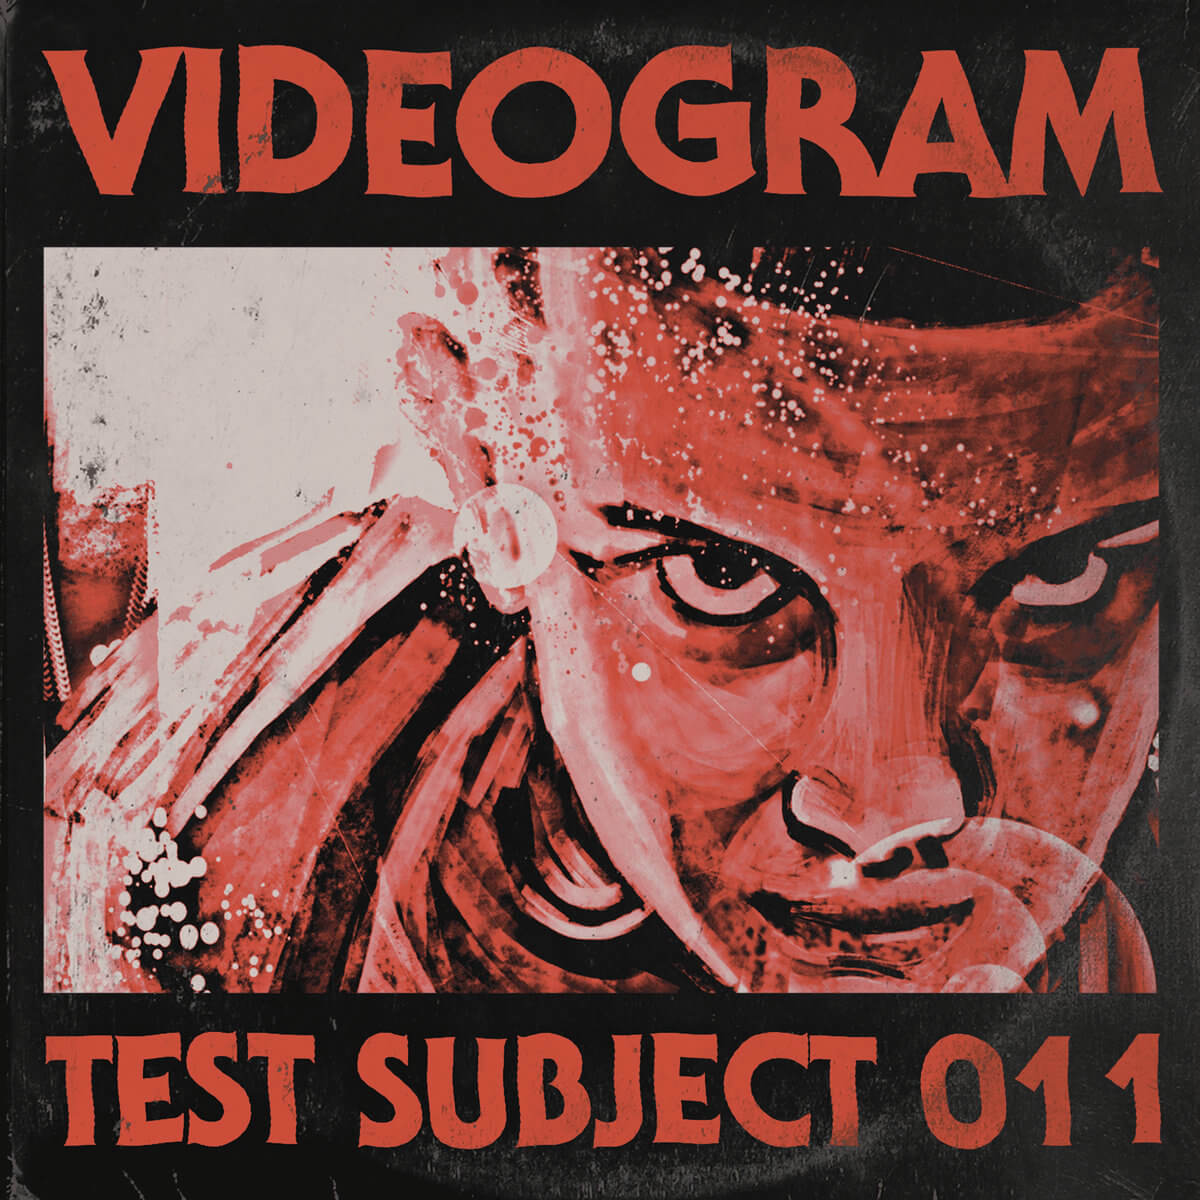 VINYL OF THE MONTH : Videogram – “Test Subject 011”